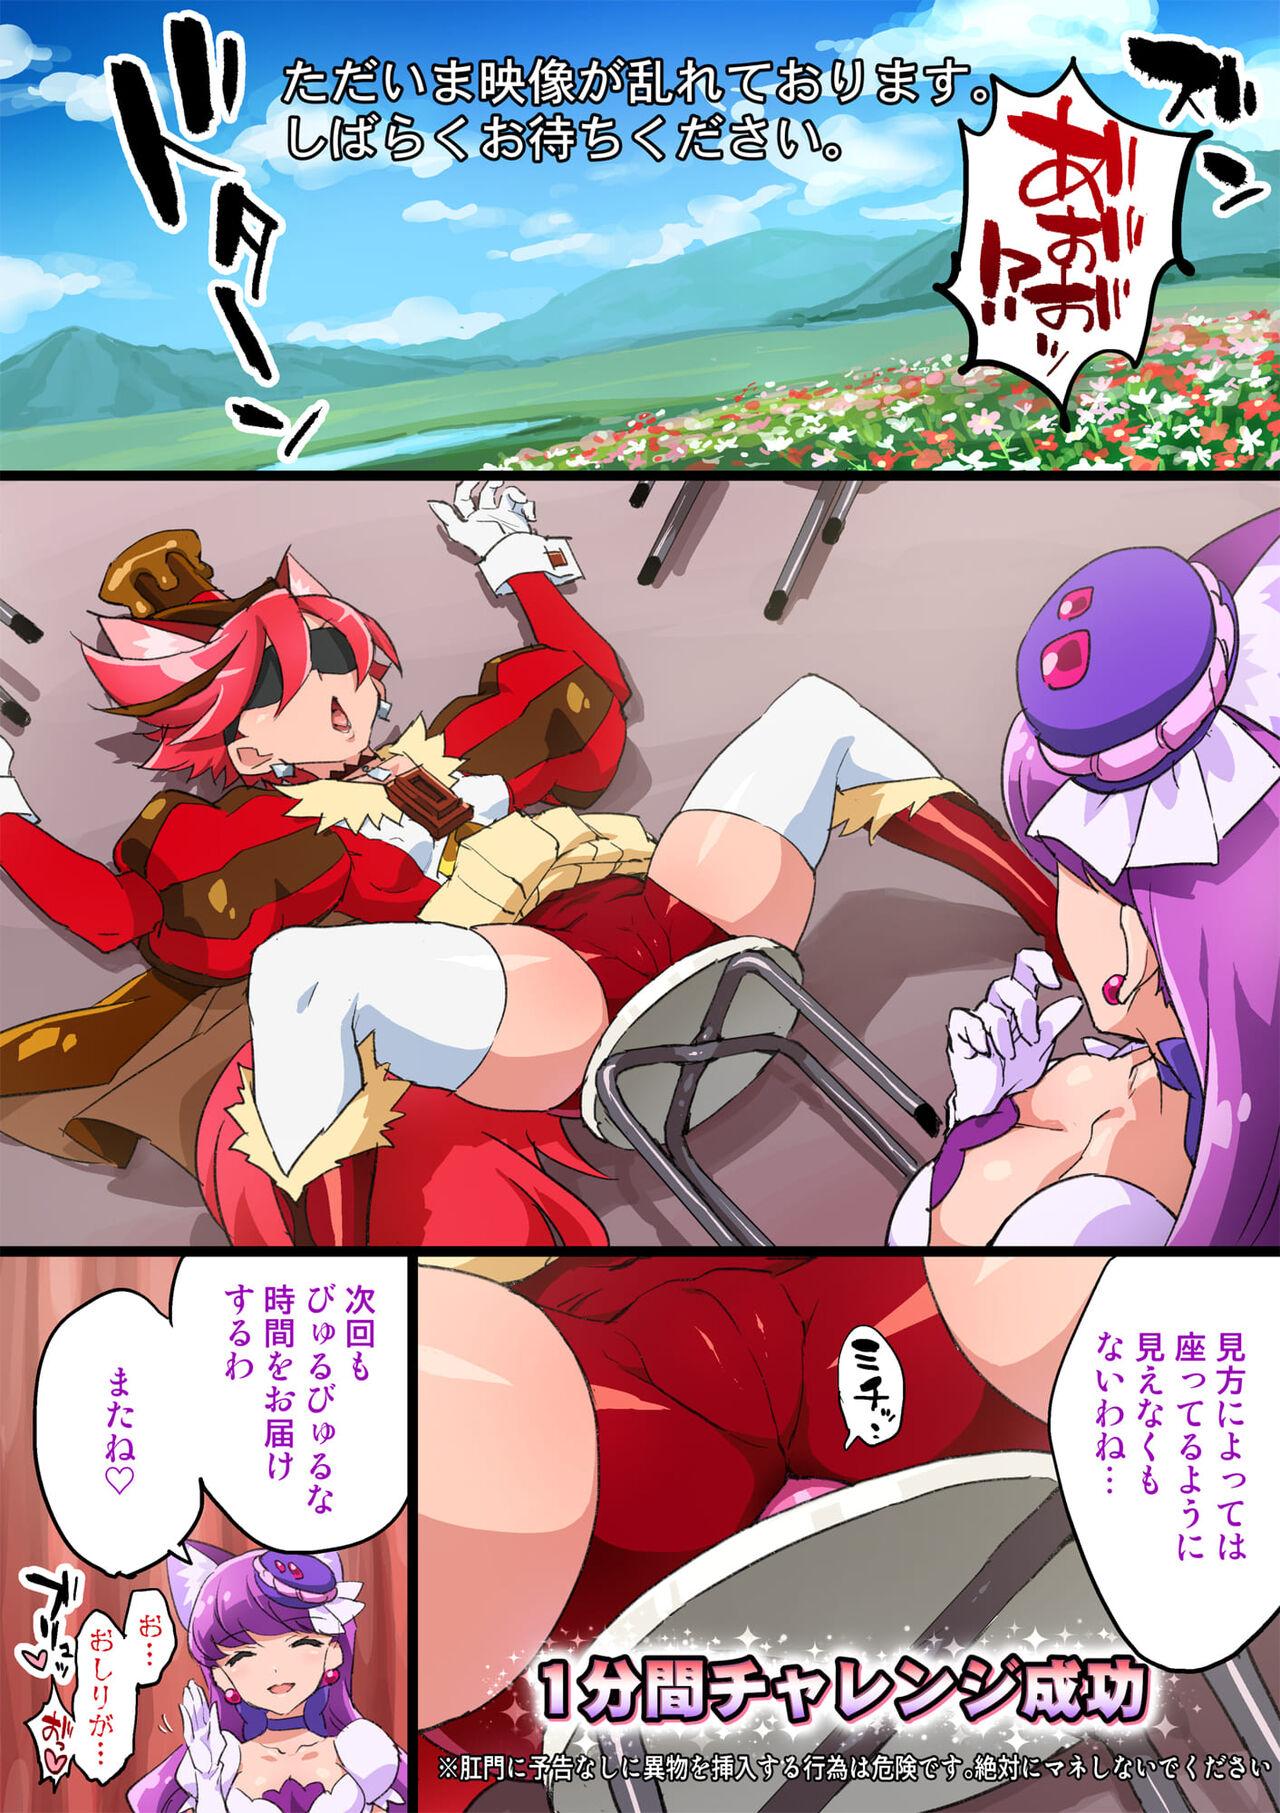 Sweet びゅるぷり#1 #2「一人椅子取りゲーム」 Chicks - Page 4